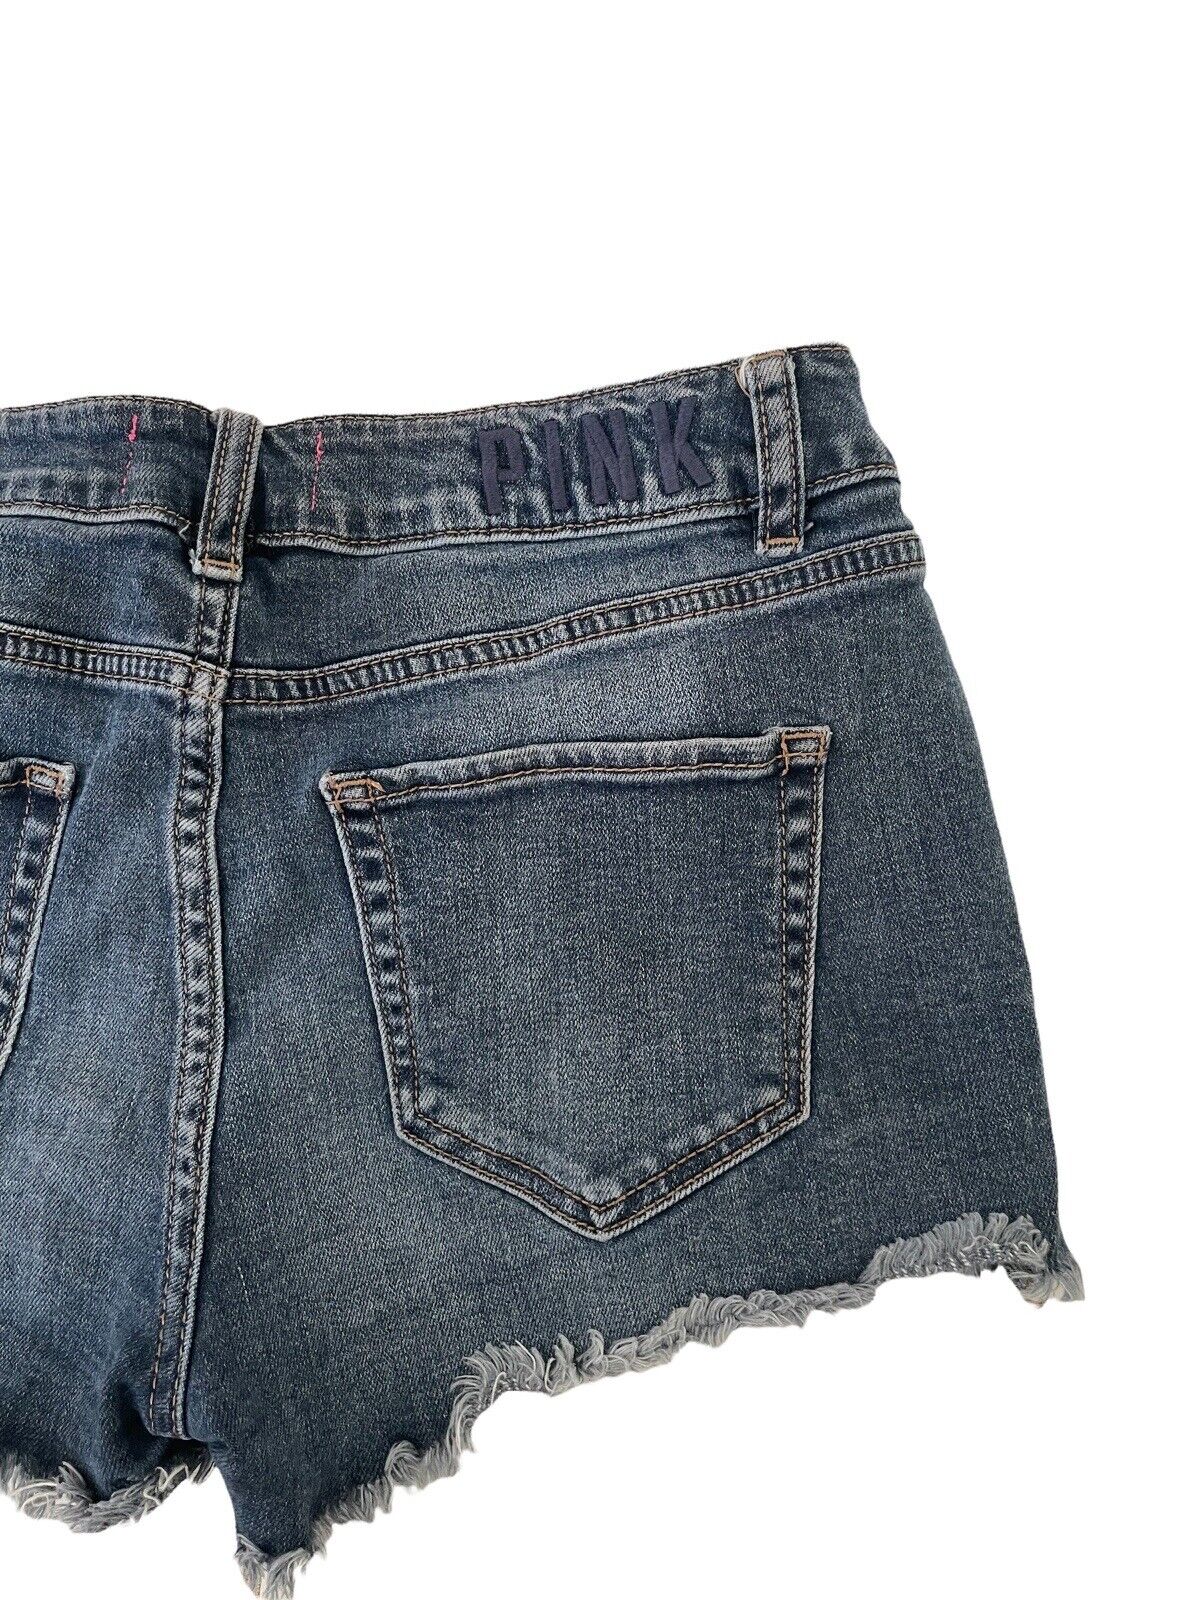 women's victoria's secret PINK denim shorts size 8